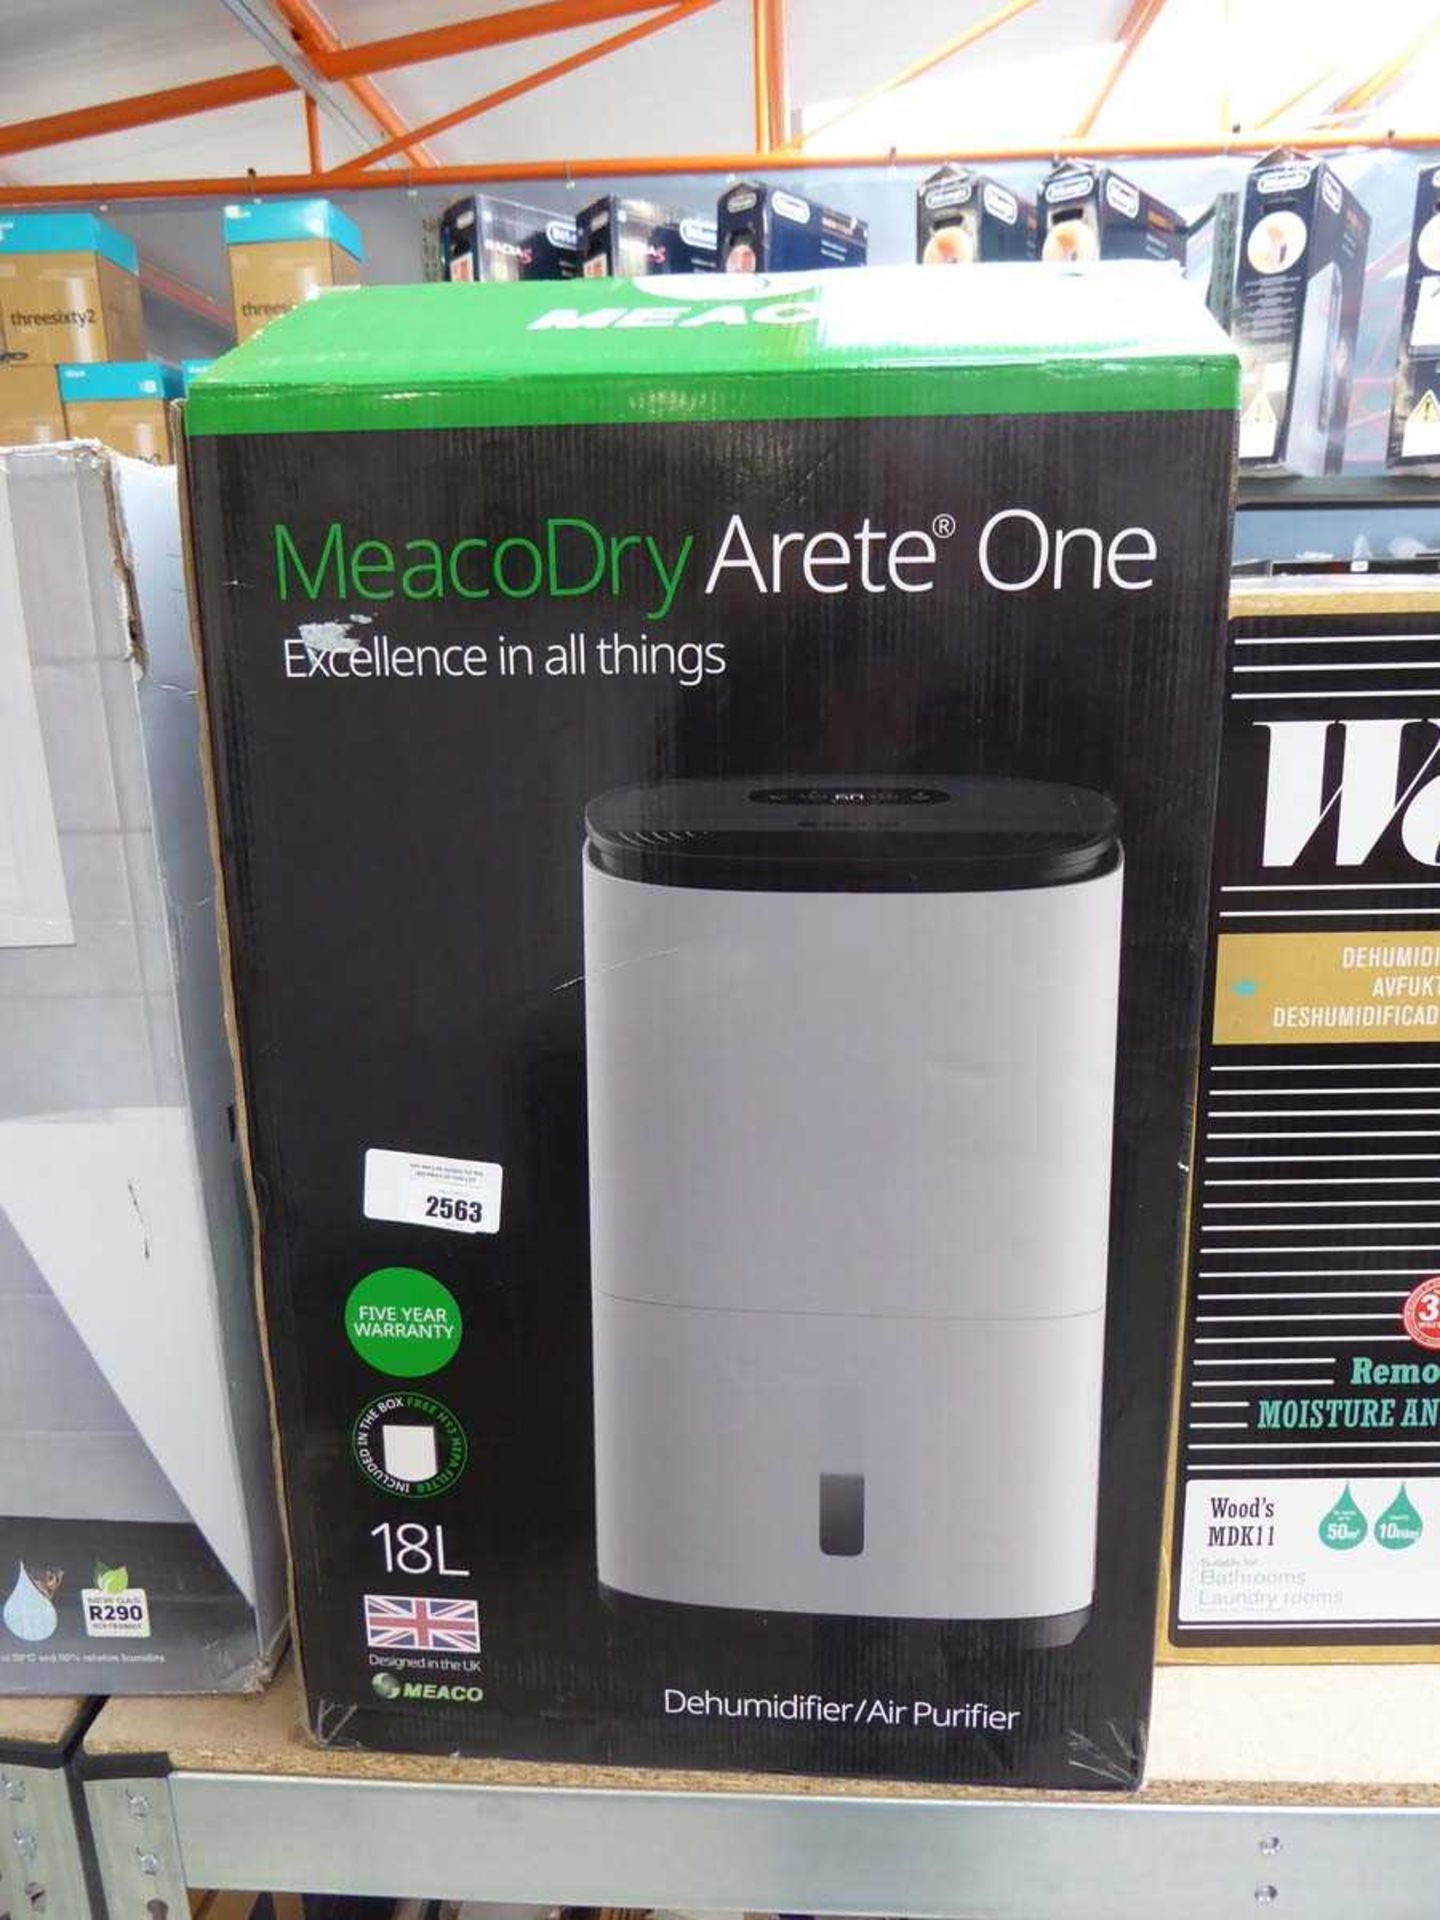 +VAT Boxed MeacoDry Arete One 18L dehumidifier/ air purifier